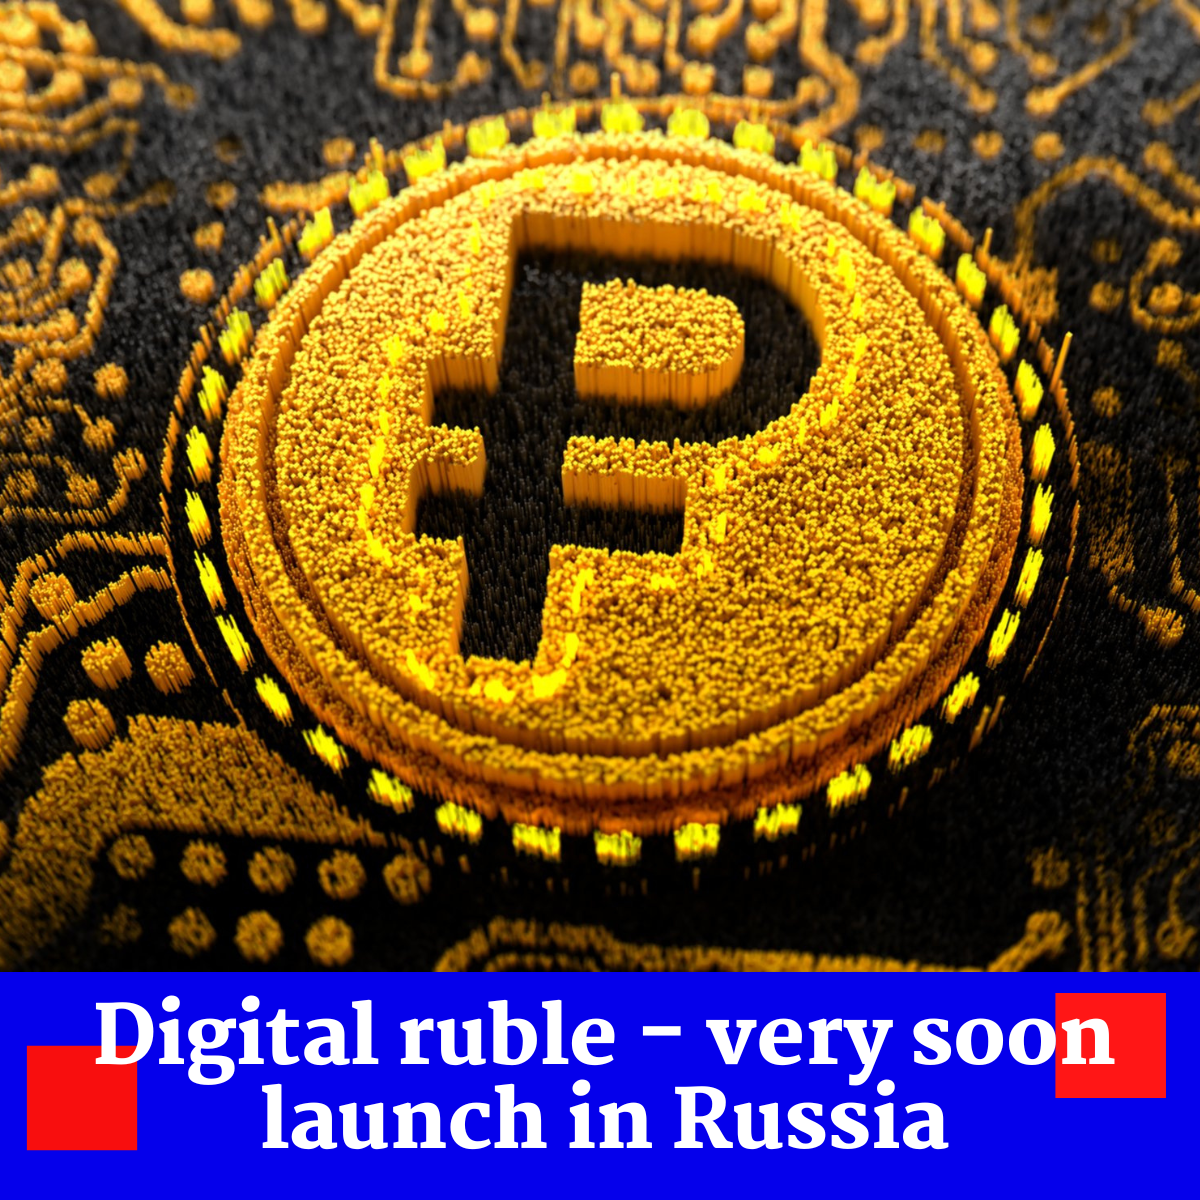 digital-ruble-launch-in-russia-very-soon